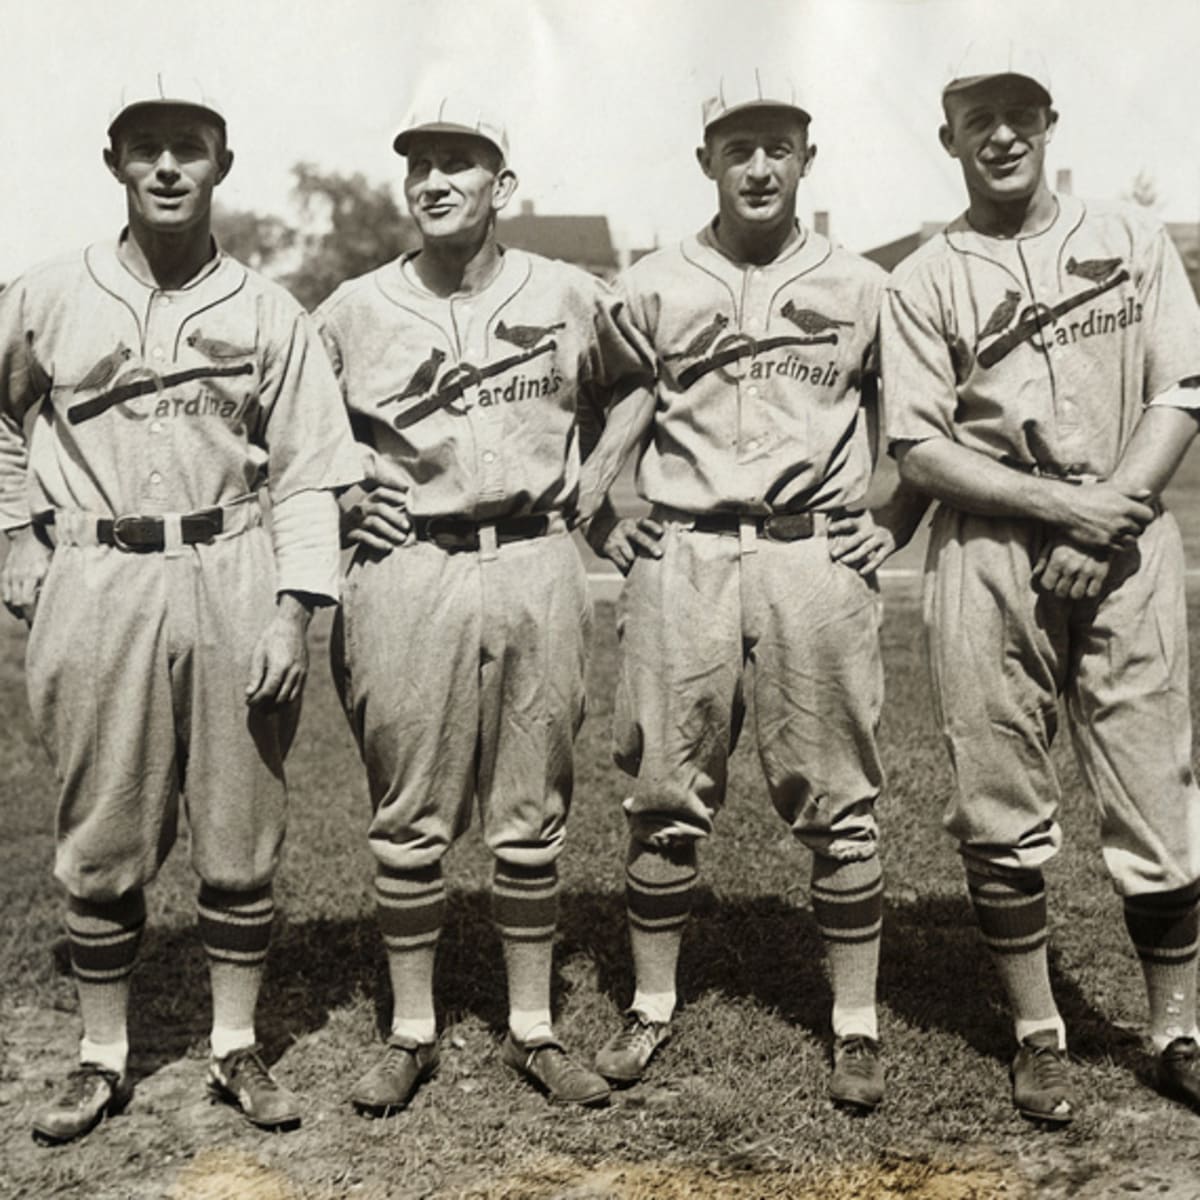 The history of the Roanoke Black Cardinals, a 1940s baseball team -  Cardinal News